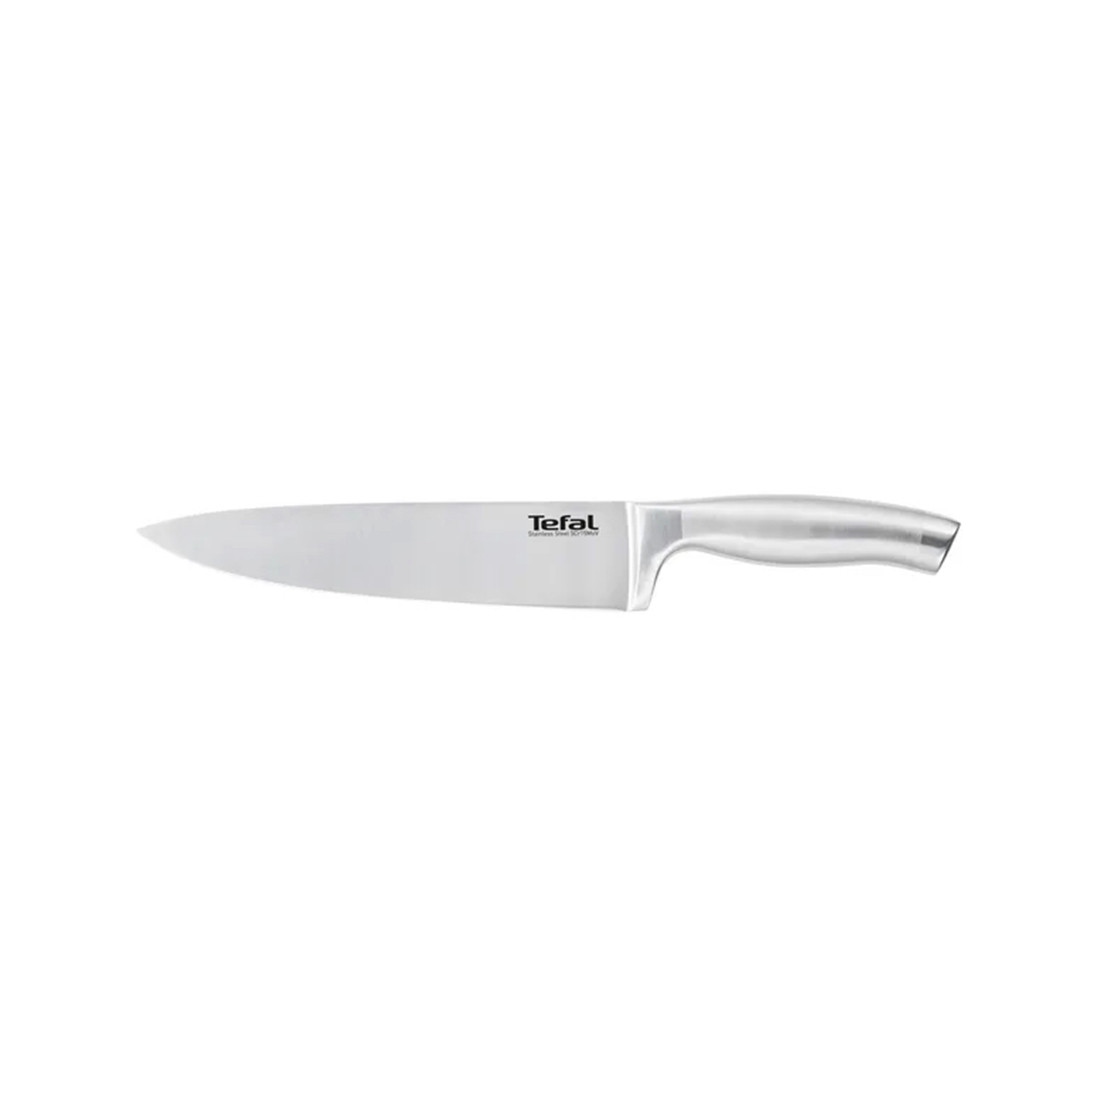 Нож поварской 20 см TEFAL K1700274, фото 1